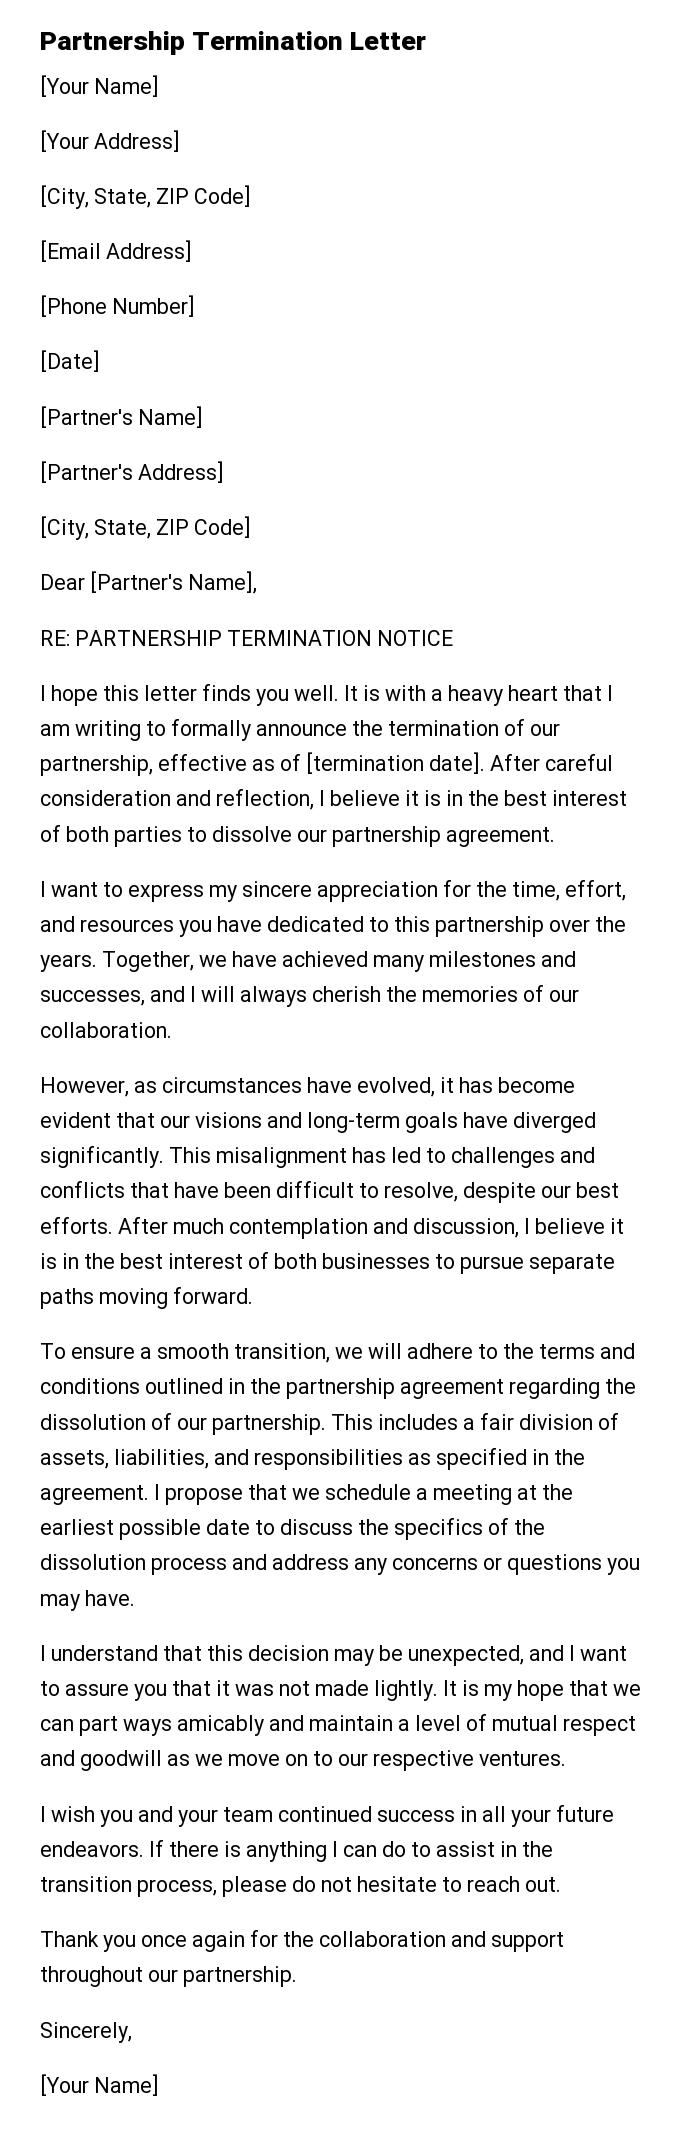 Partnership Termination Letter